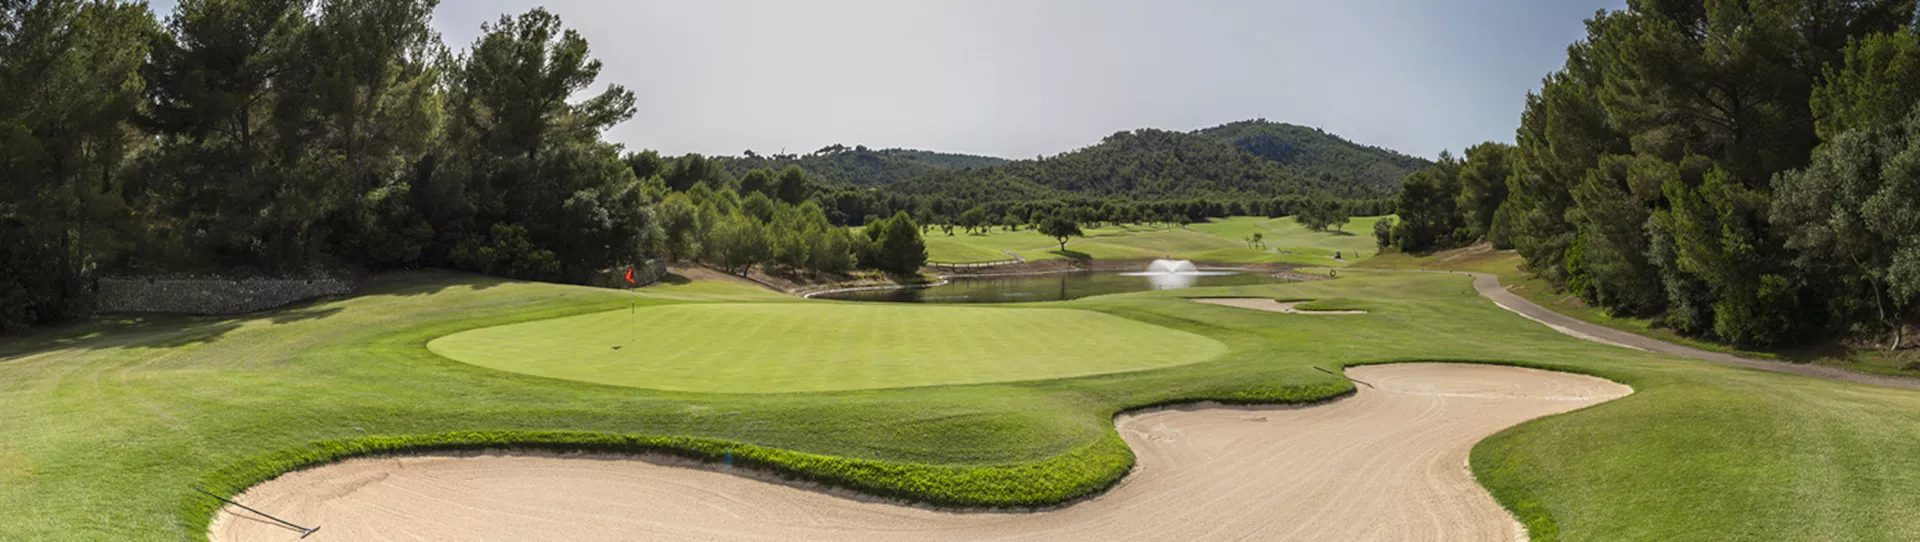 Spain golf courses - Arabella Son Quint Golf Course - Photo 1